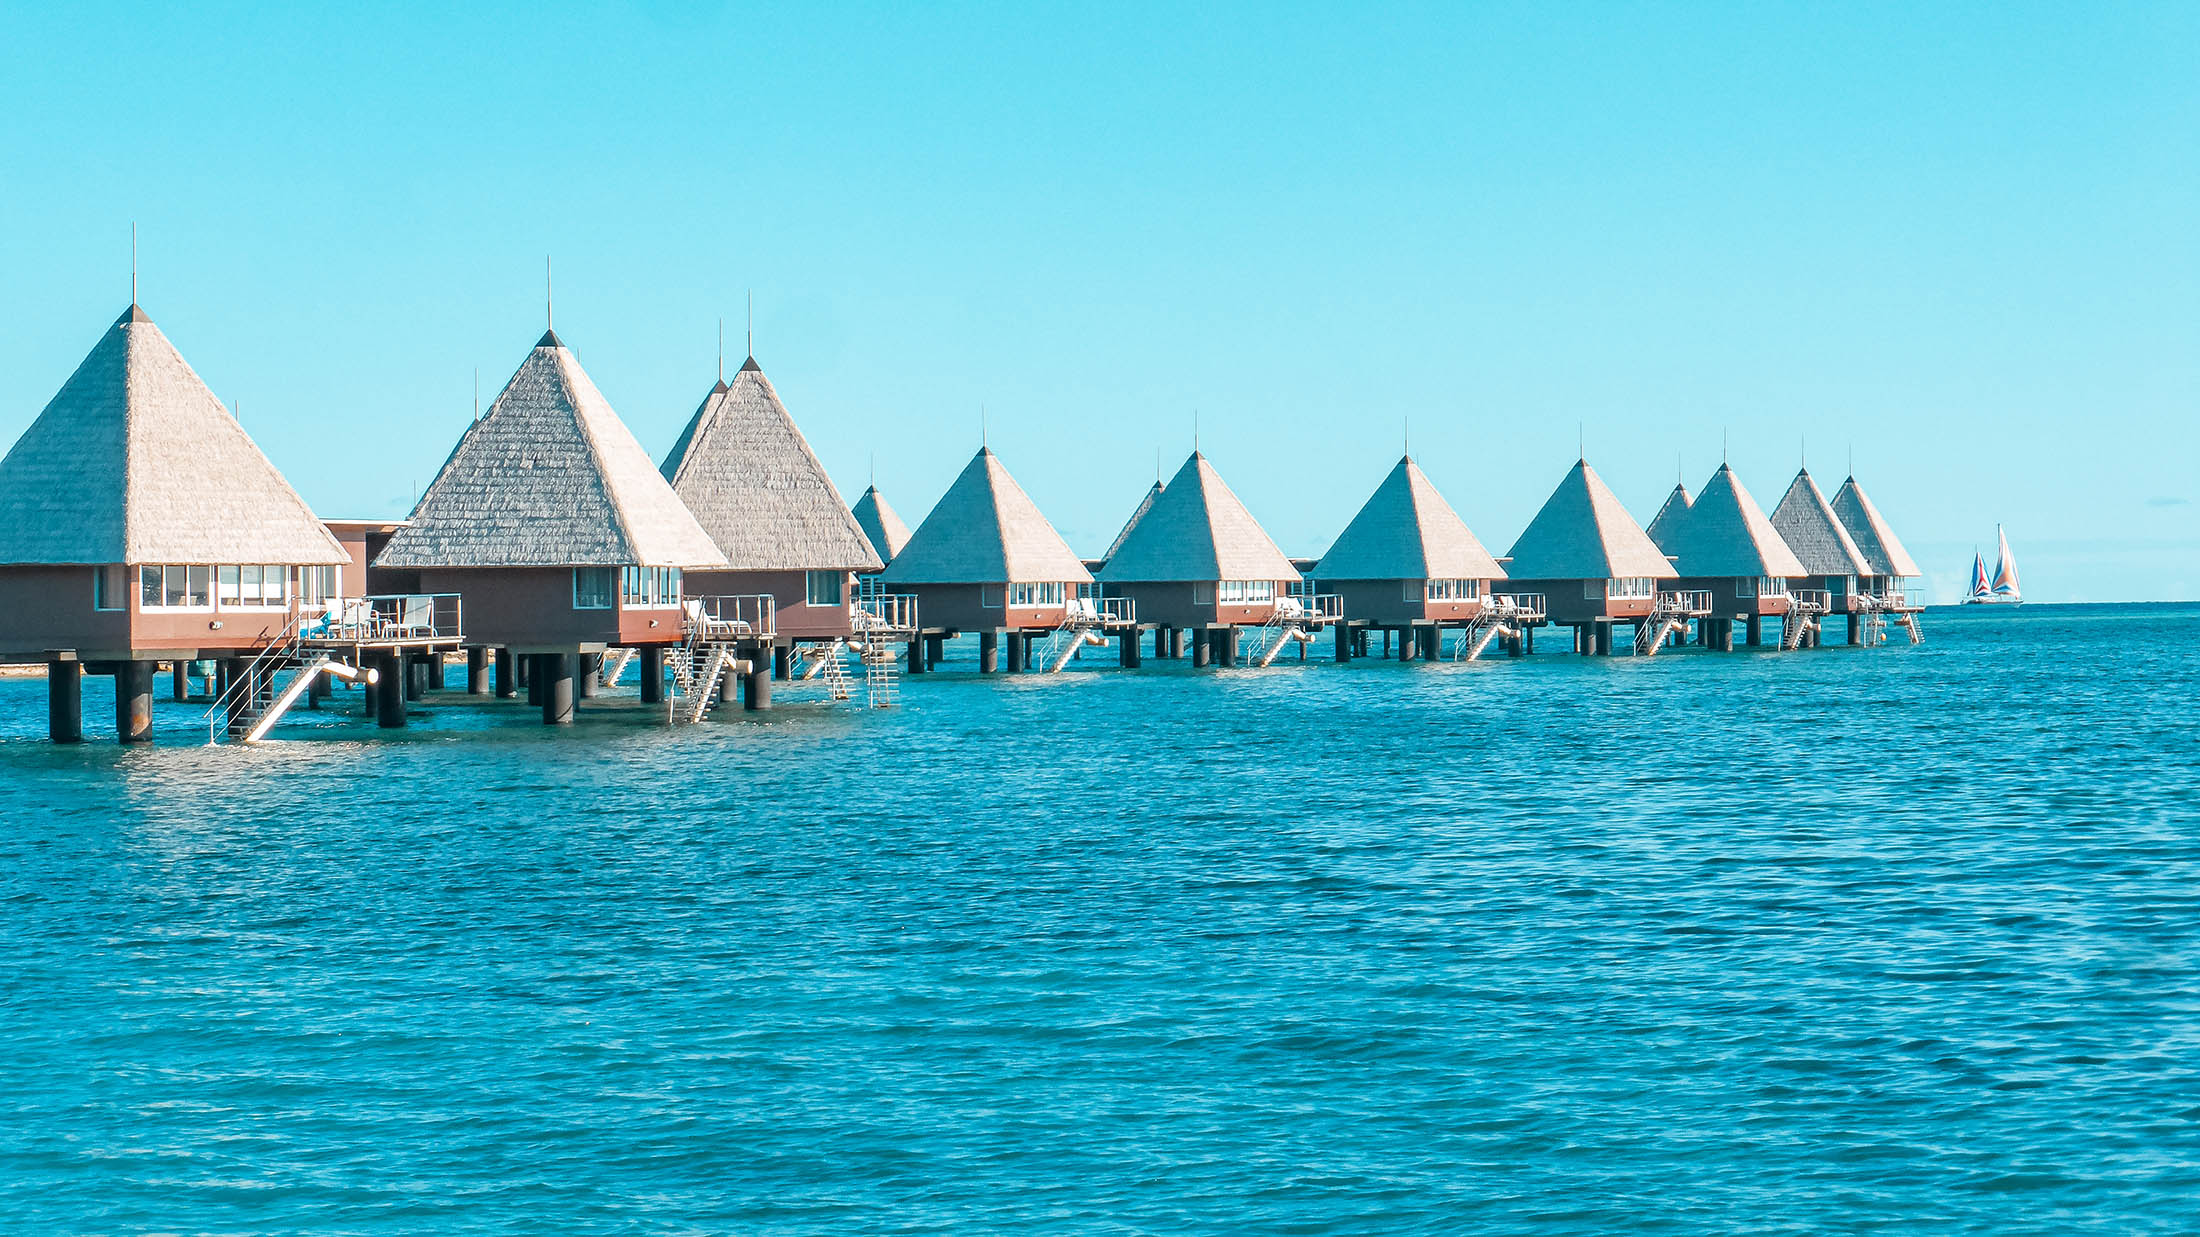 Overwater bungalows of resort on Master Islasnd (Îlot Maître), New Caledonia